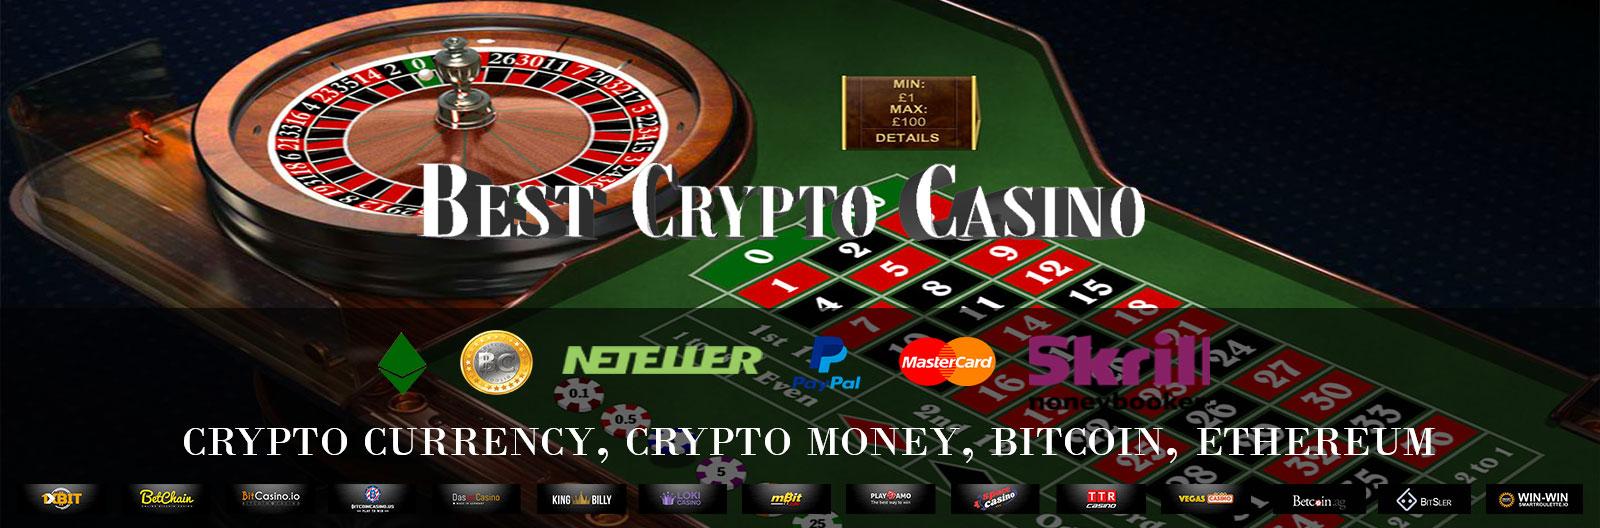 Bitcoin slot online bet 500